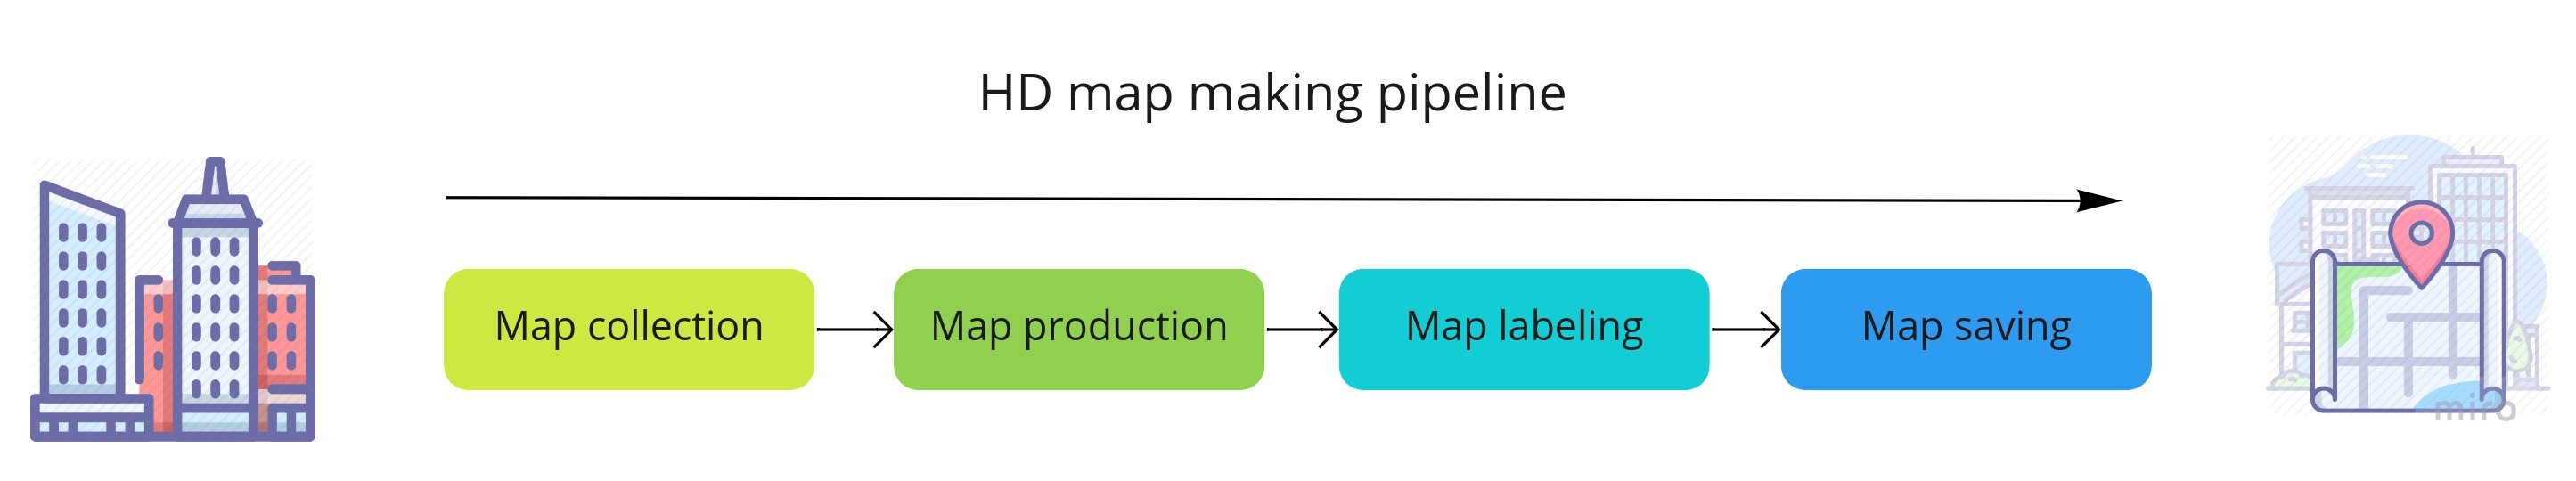 HDmap_pipeline